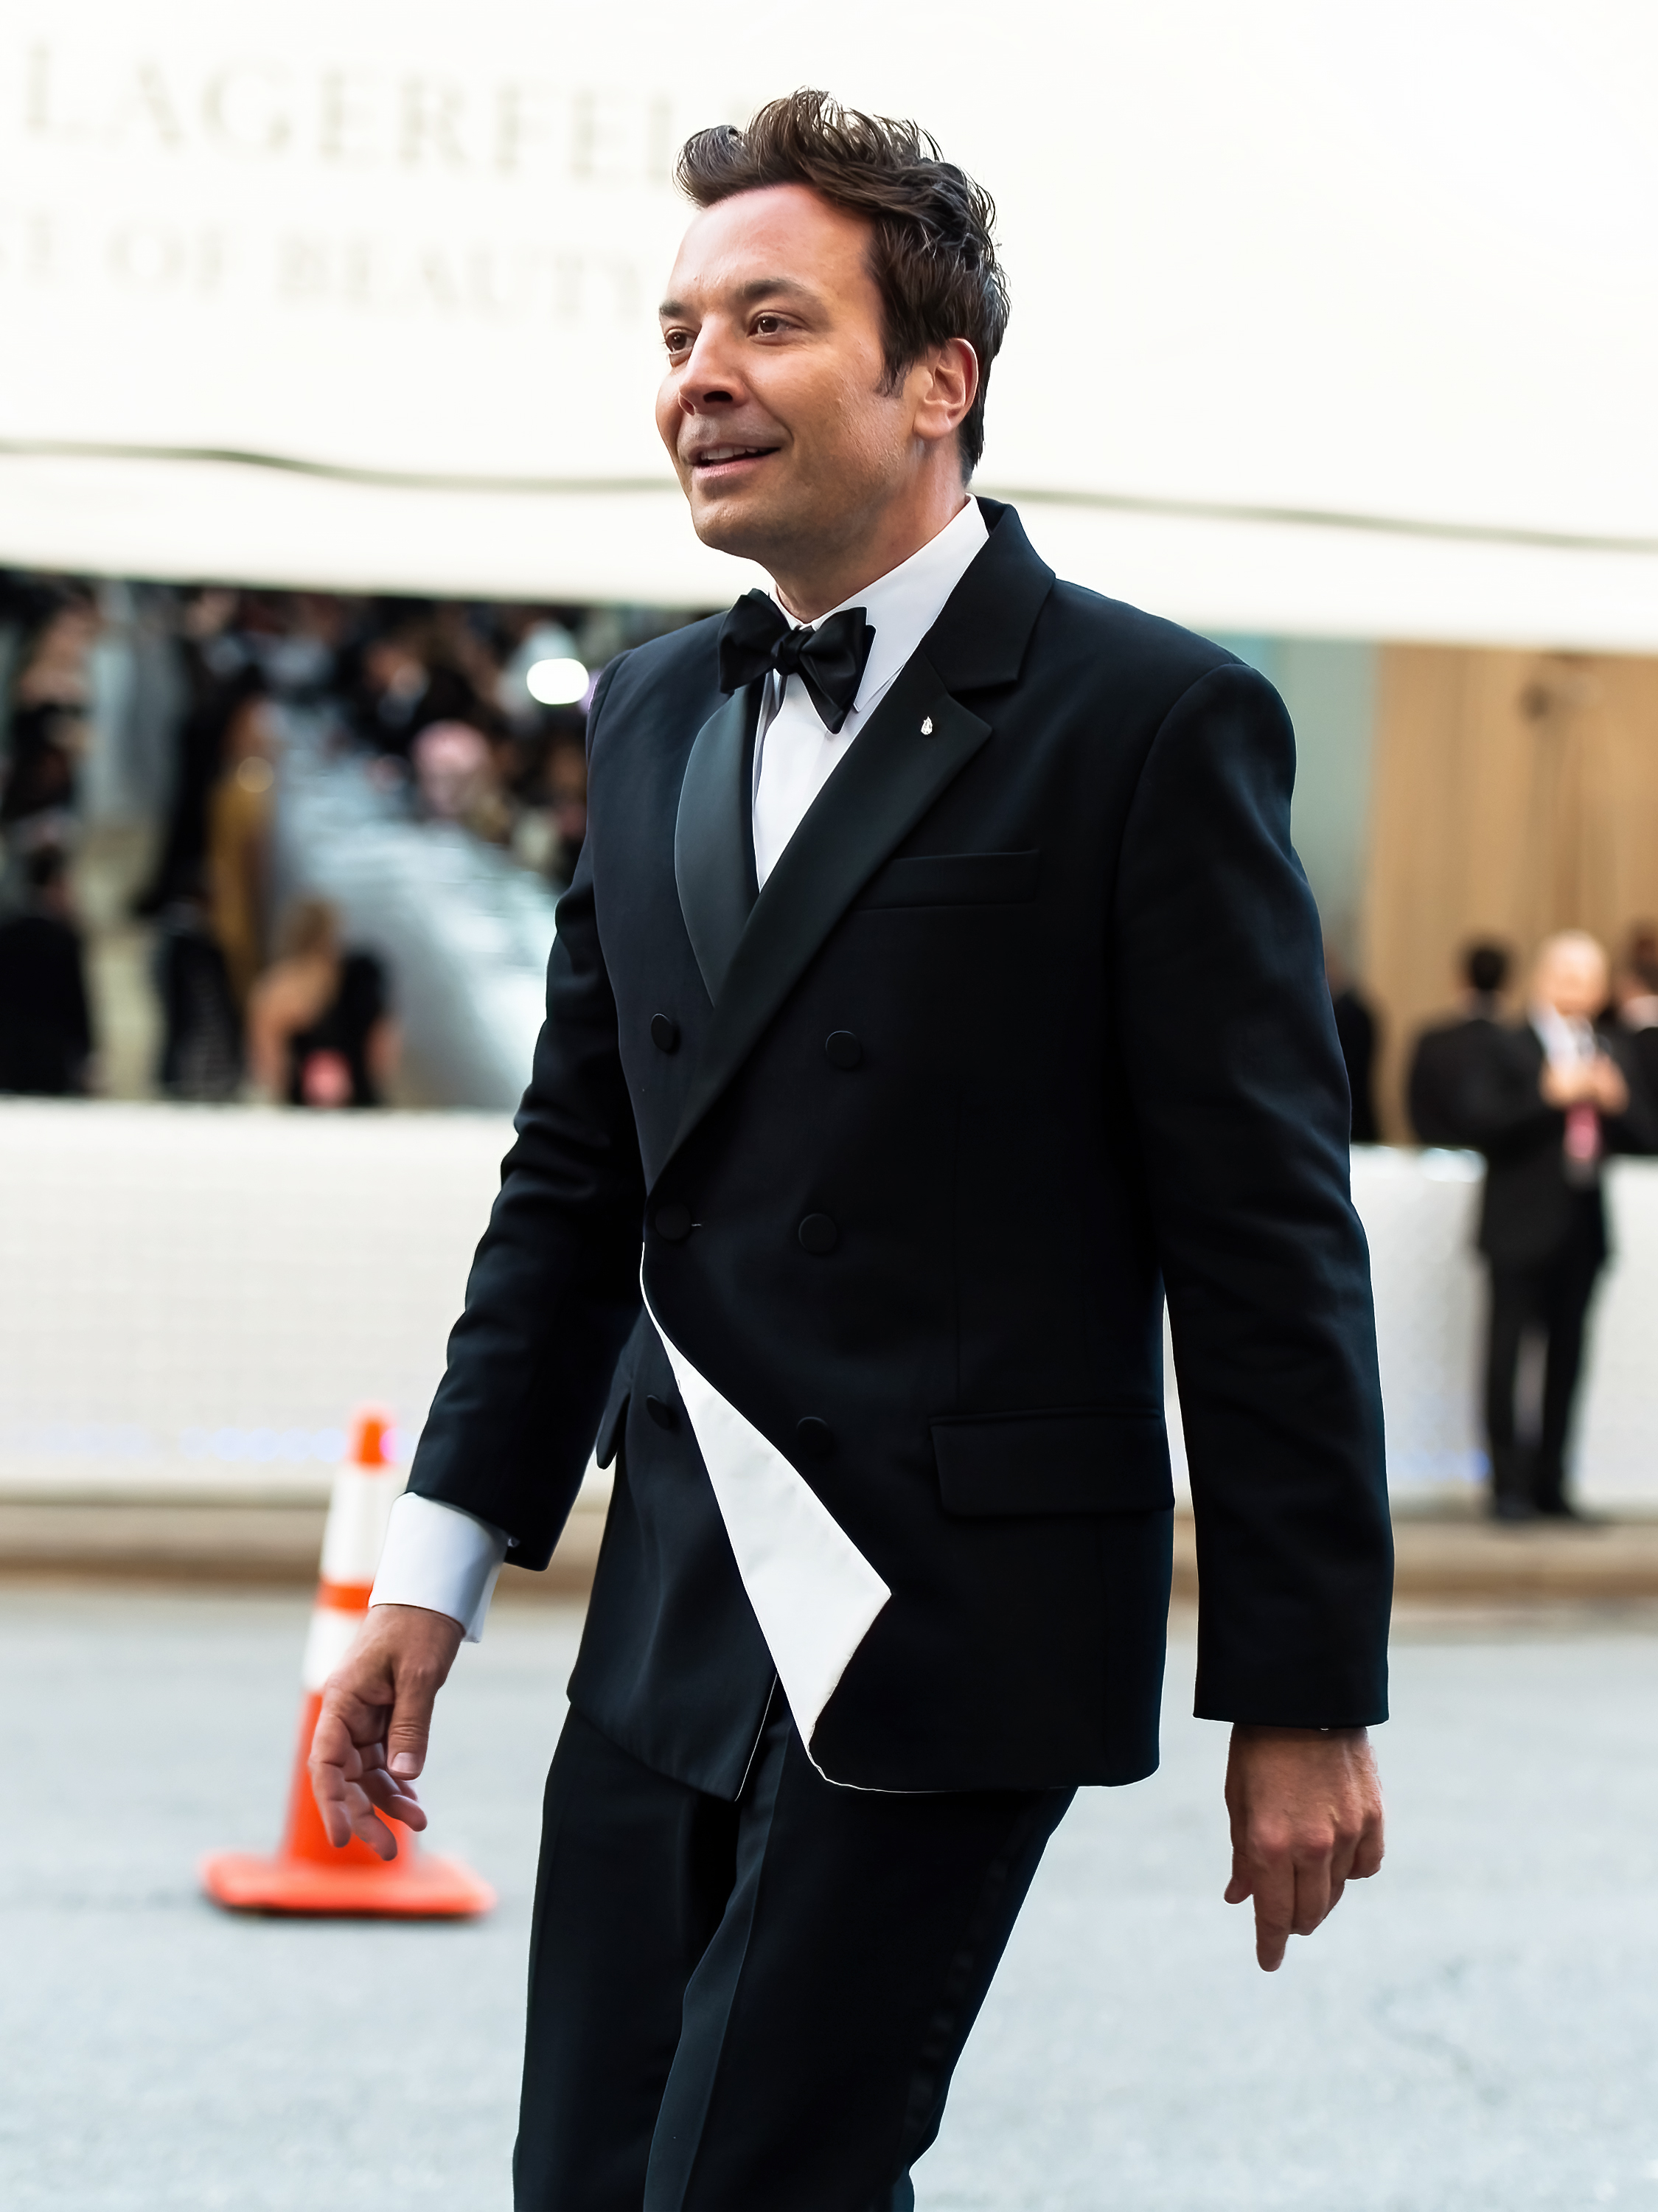 Jimmy Fallon wearing a tuxedo as he walks outside at an event